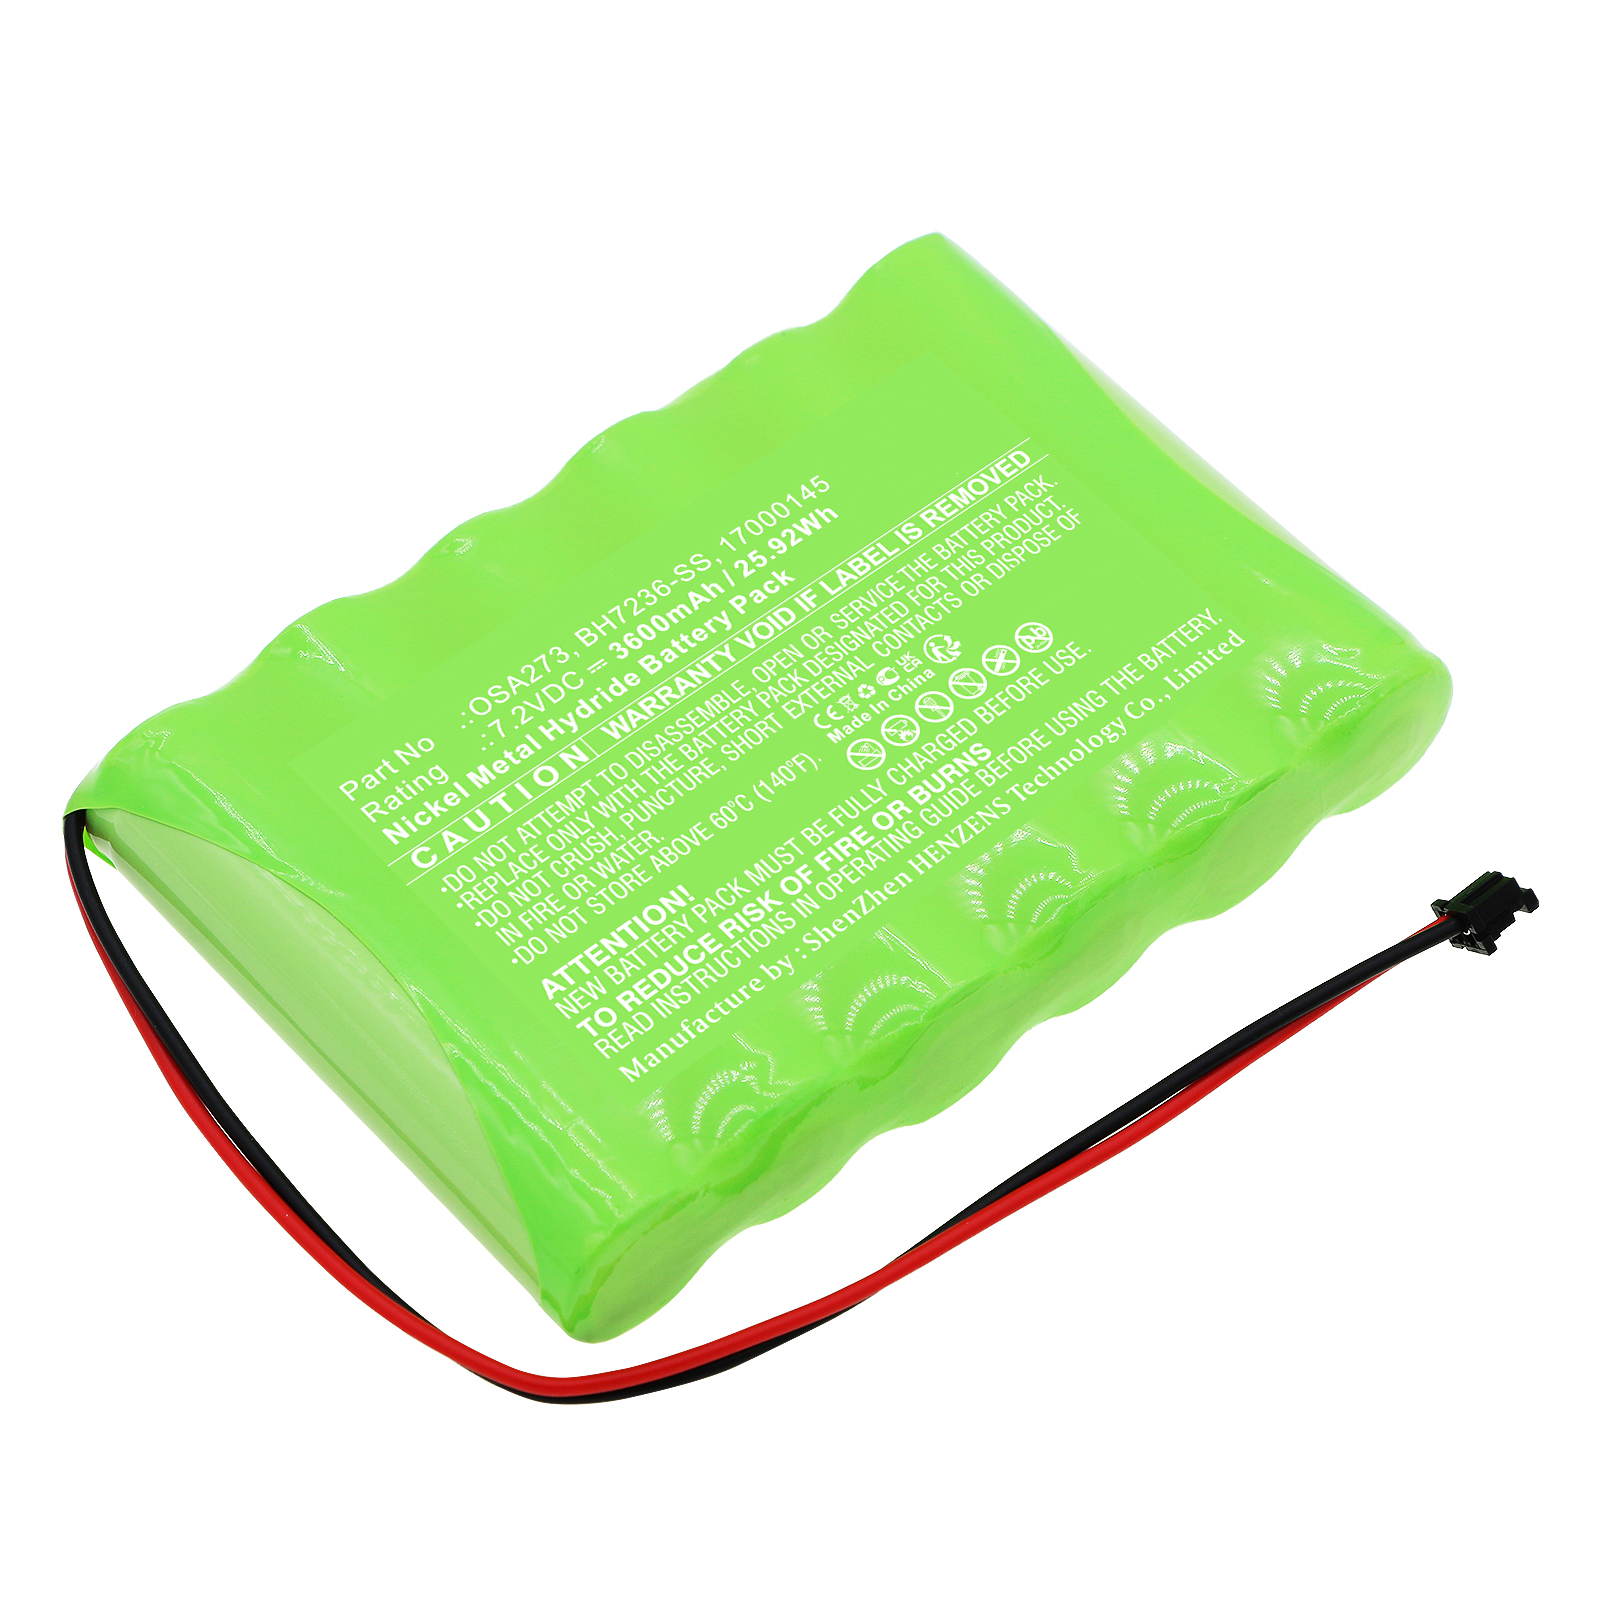 Synergy Digital Emergency Lighting Battery, Compatible with ADT BH7236-SS Emergency Lighting Battery (Ni-MH, 7.2V, 3600mAh)